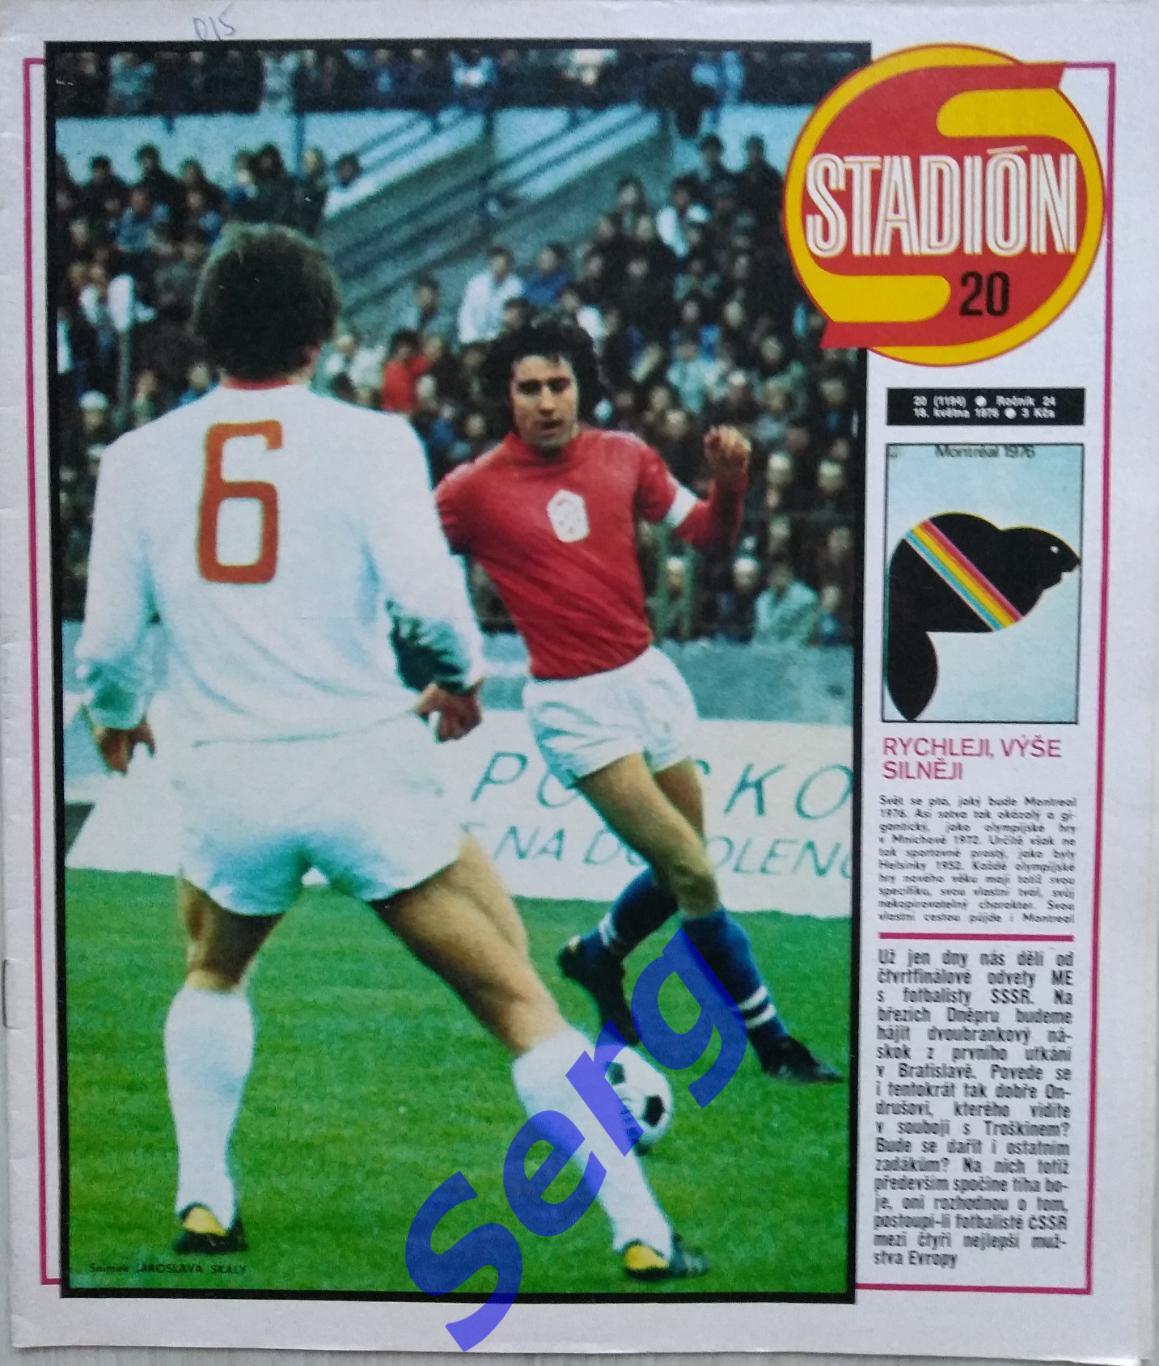 Журнал Стадион (Stadion) №20 1976 год